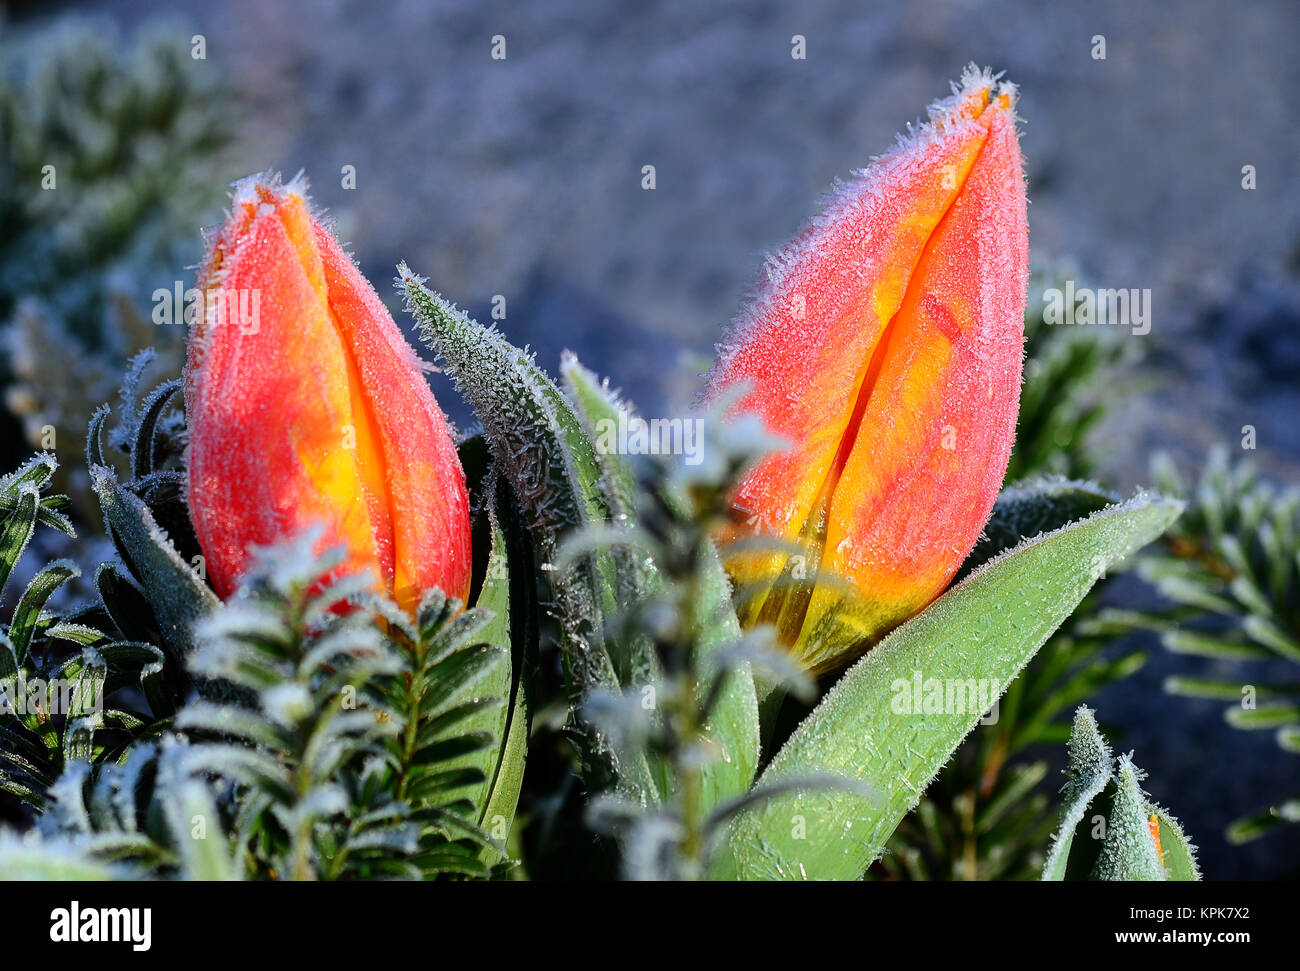 two tulips Stock Photo